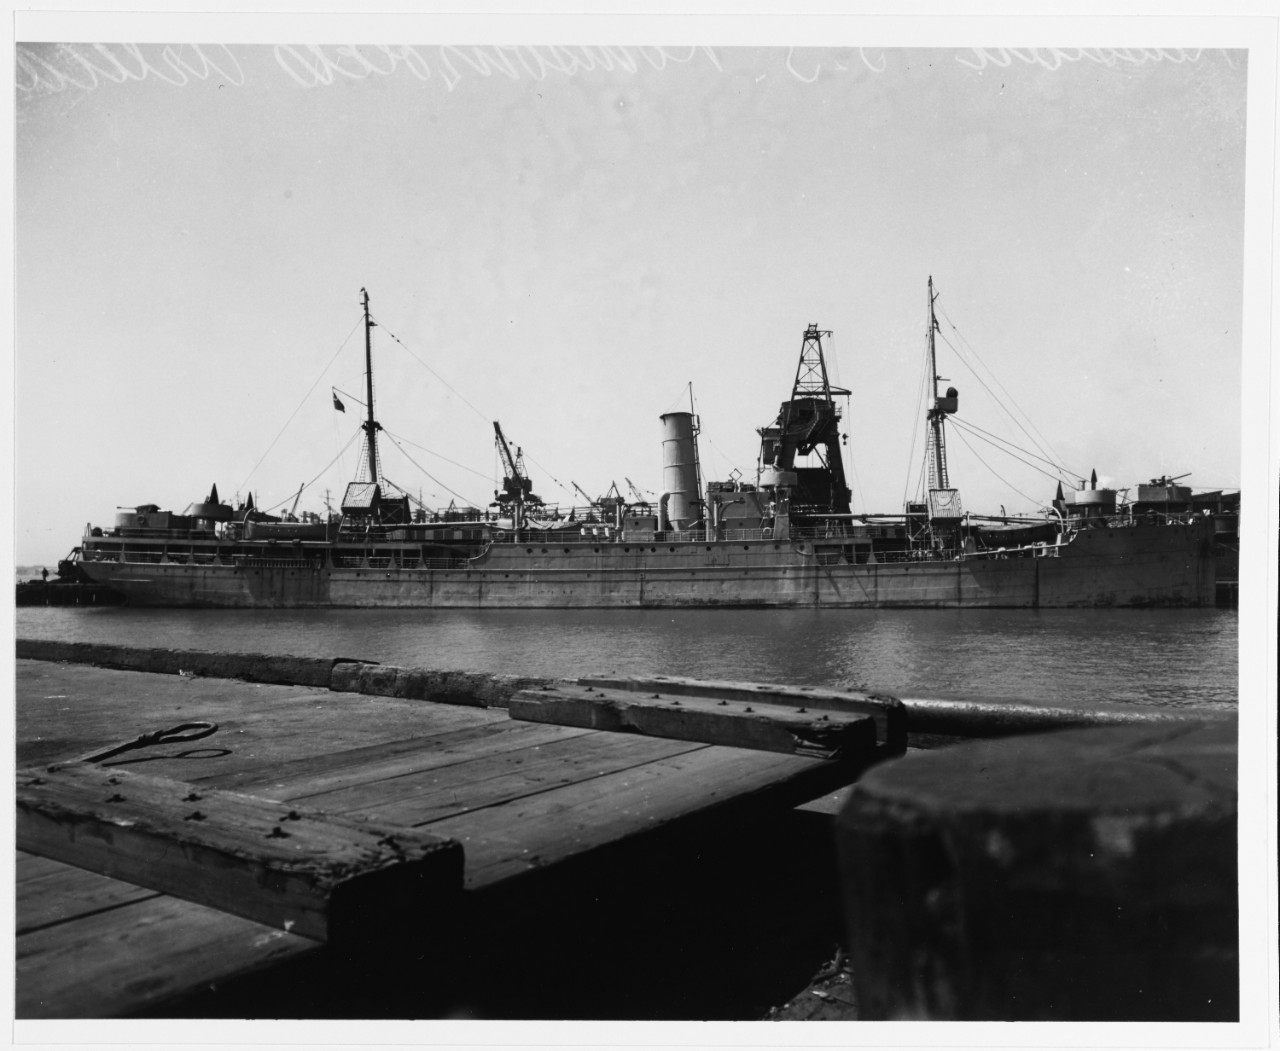 S.S. KOMSOMOLETS ARKTIKI (U.S.S.R Merchant Cargo Ship, 1897-1950?)